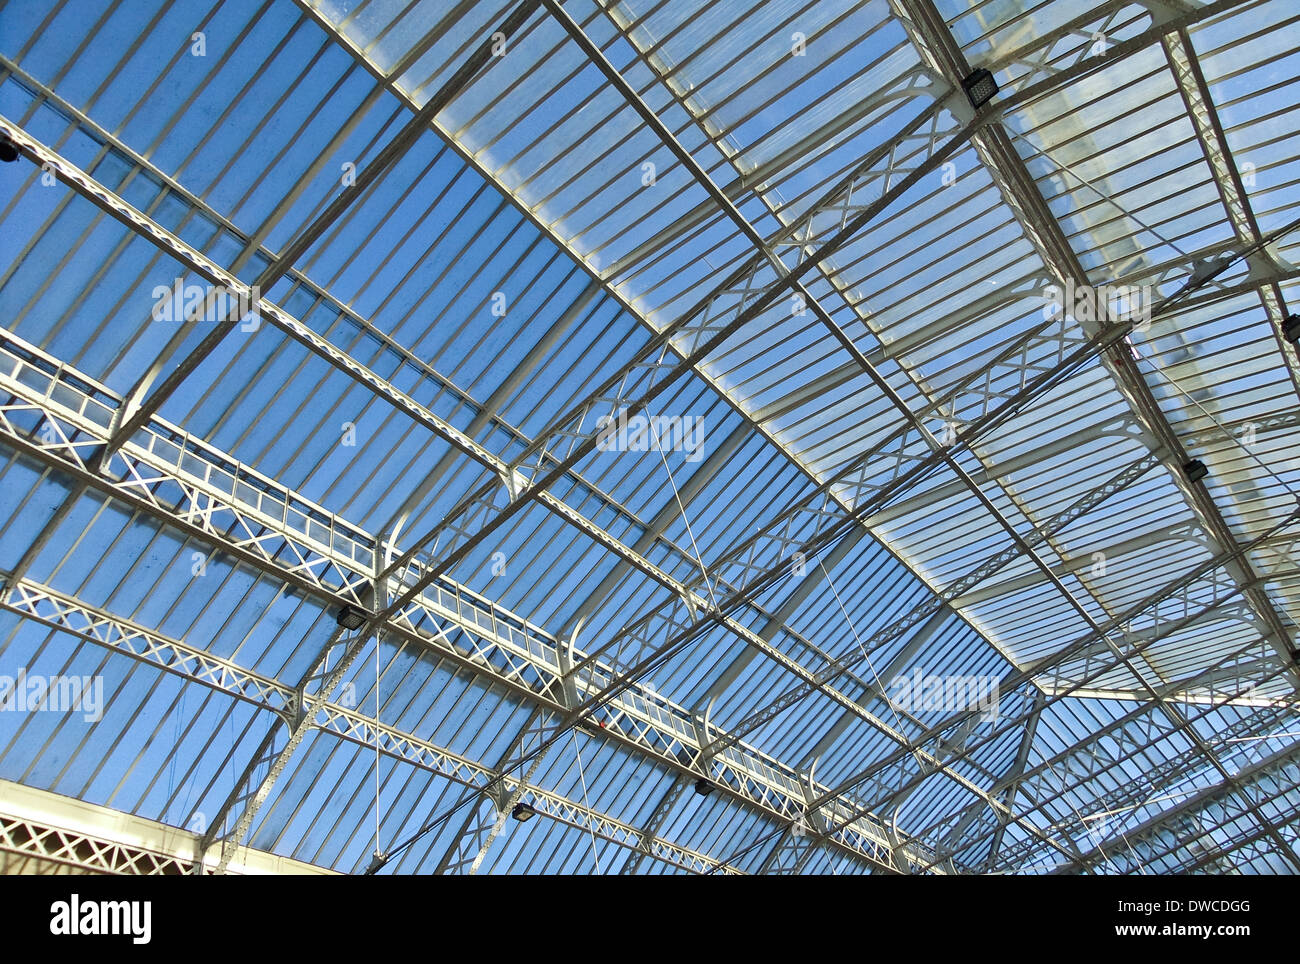 Renovated glass roof - Gare de Lyon, Paris France Stock Photo